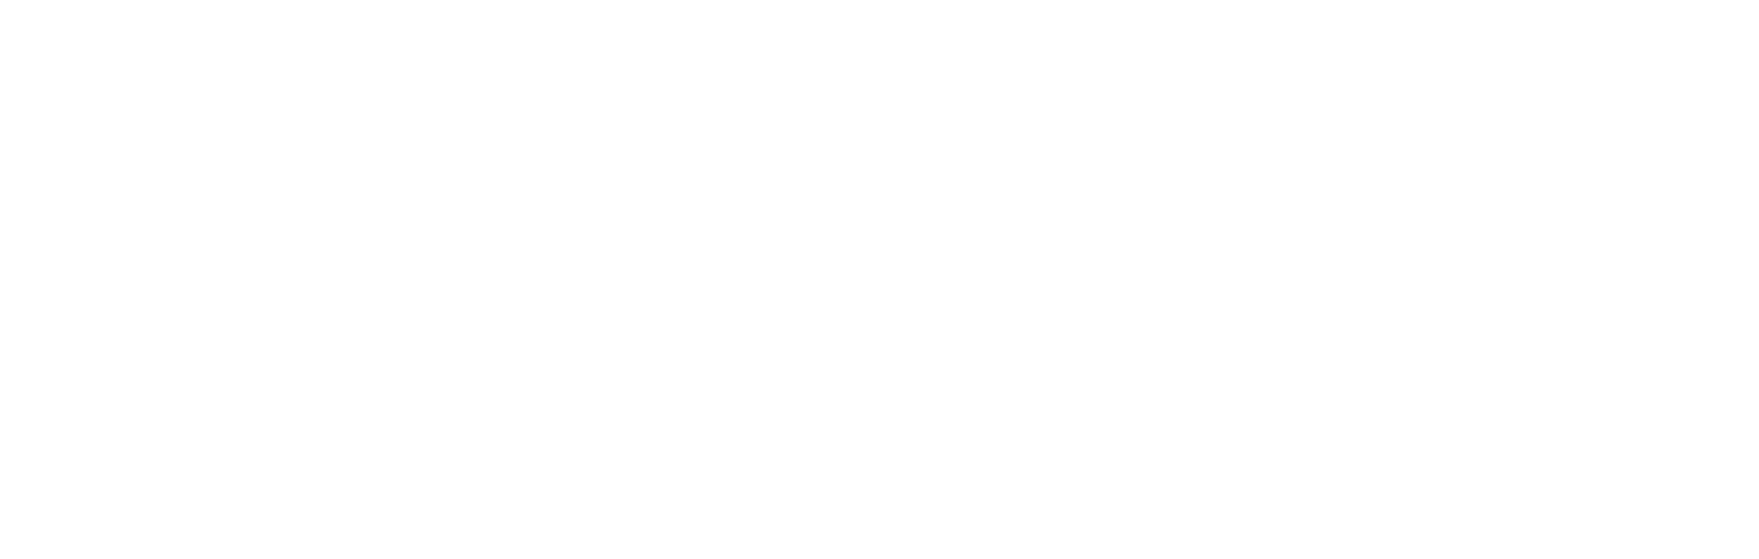 Antonio Calabrese Fractional CMO